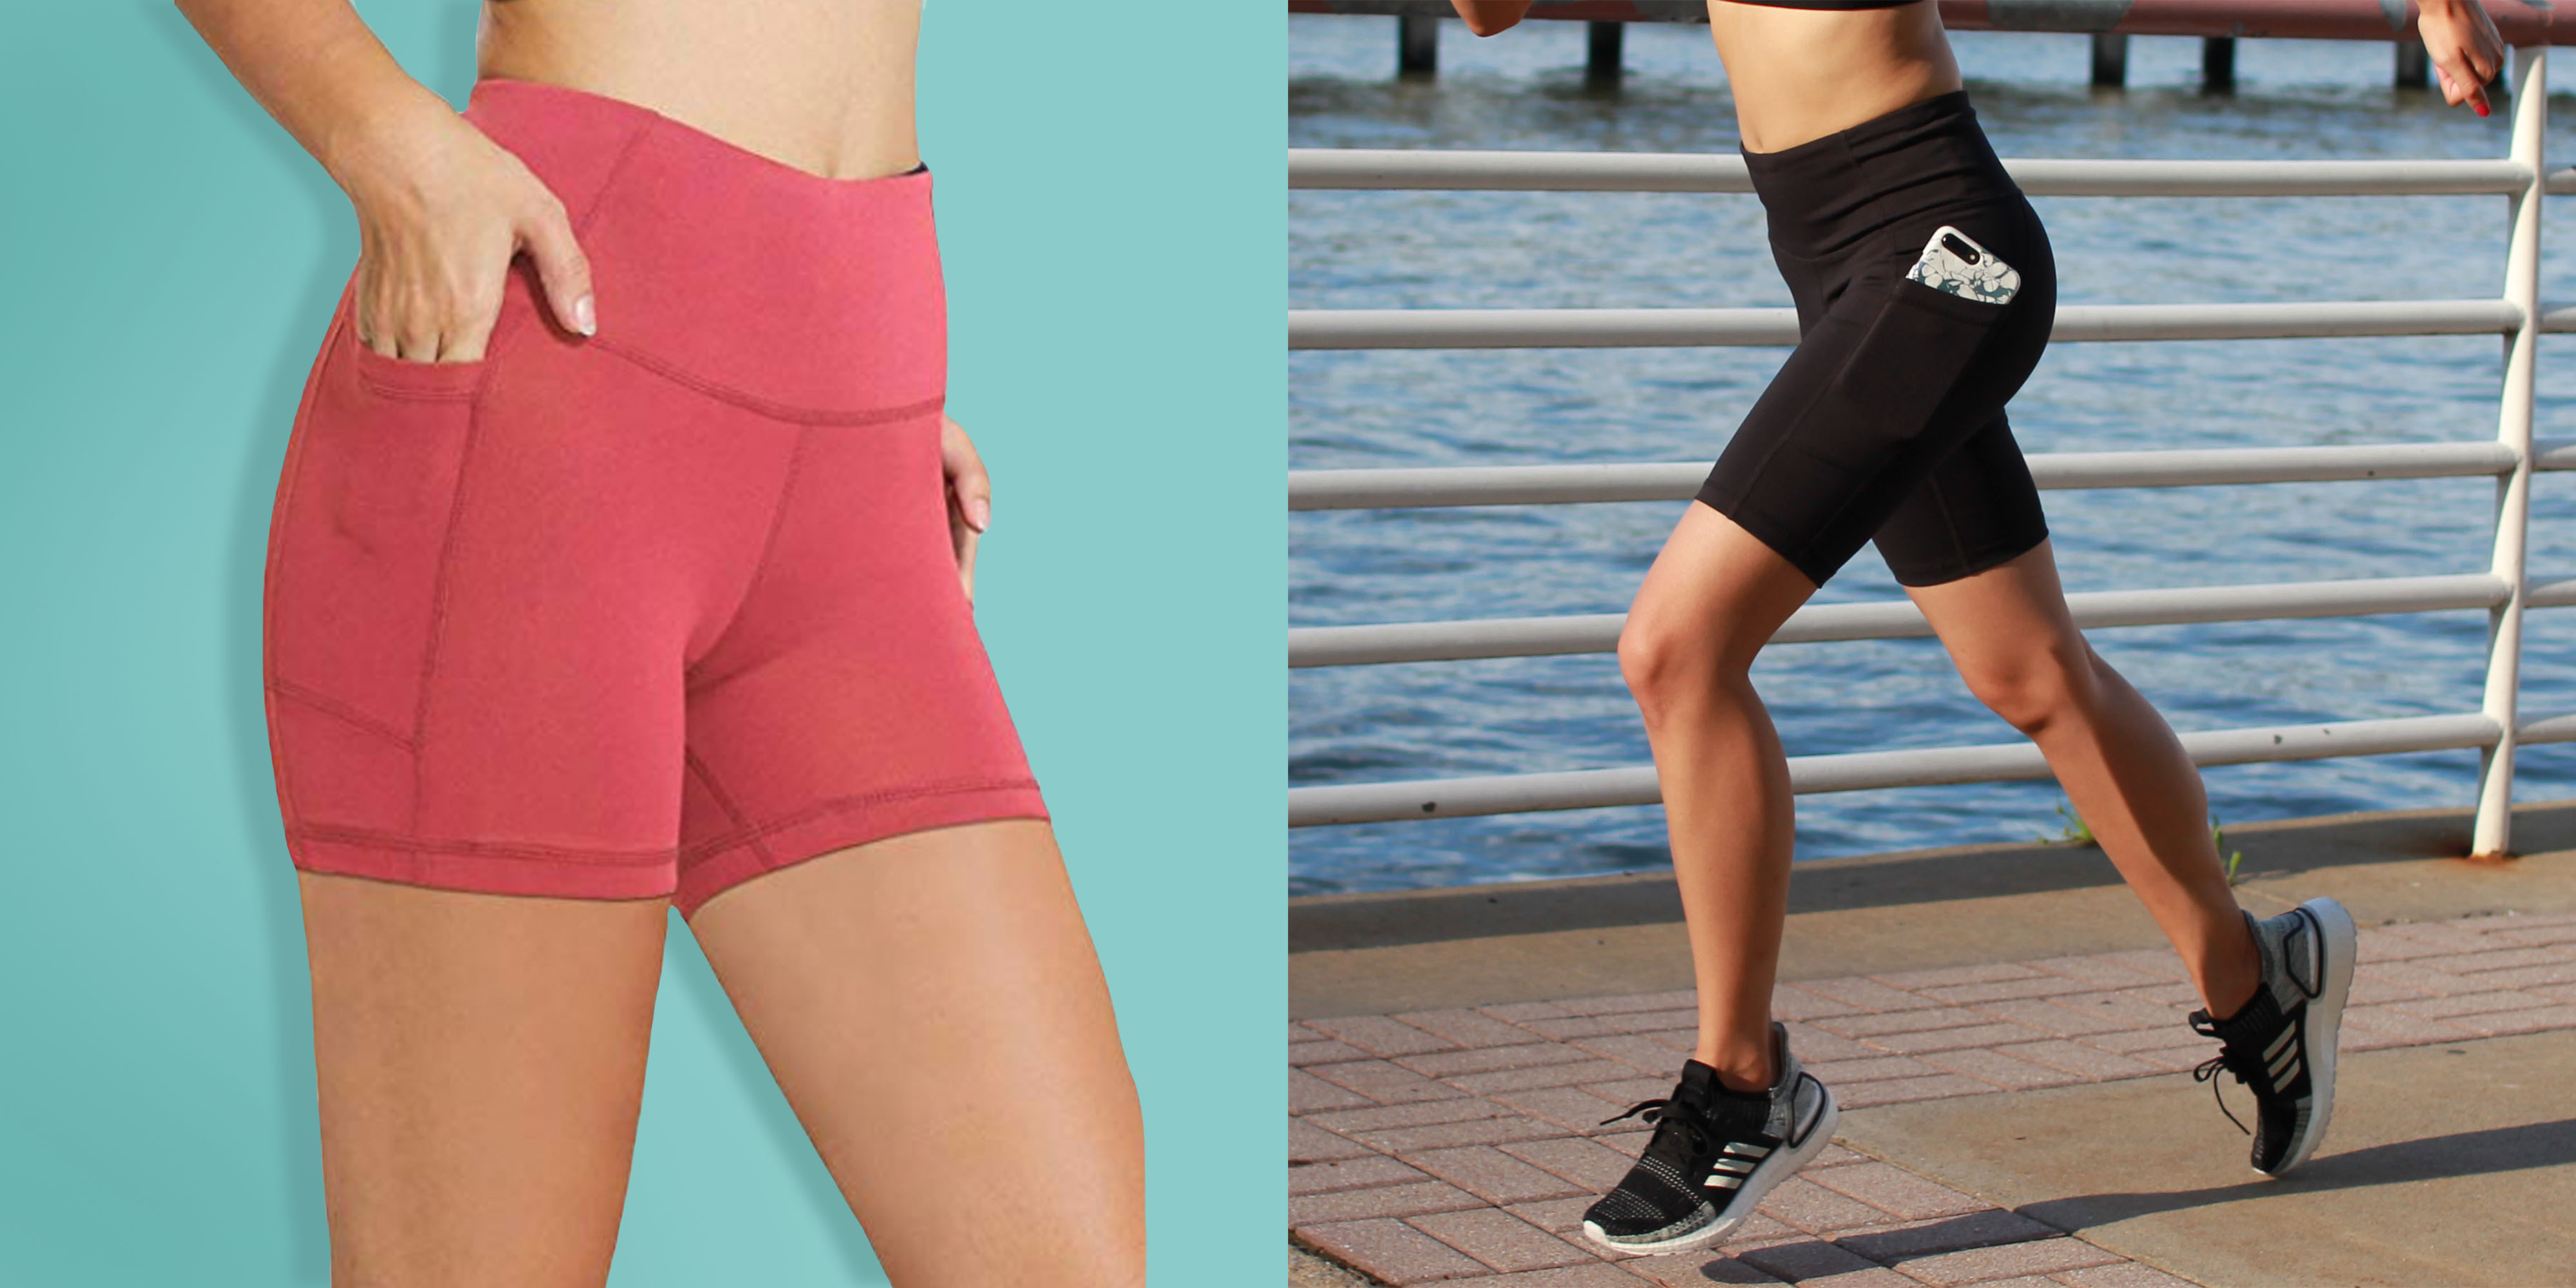 Hopgo Women's Worktout Shorts High Waist Bike Shorts 4 Tummy Control Yoga Running Shorts Tight with Inner Pocket